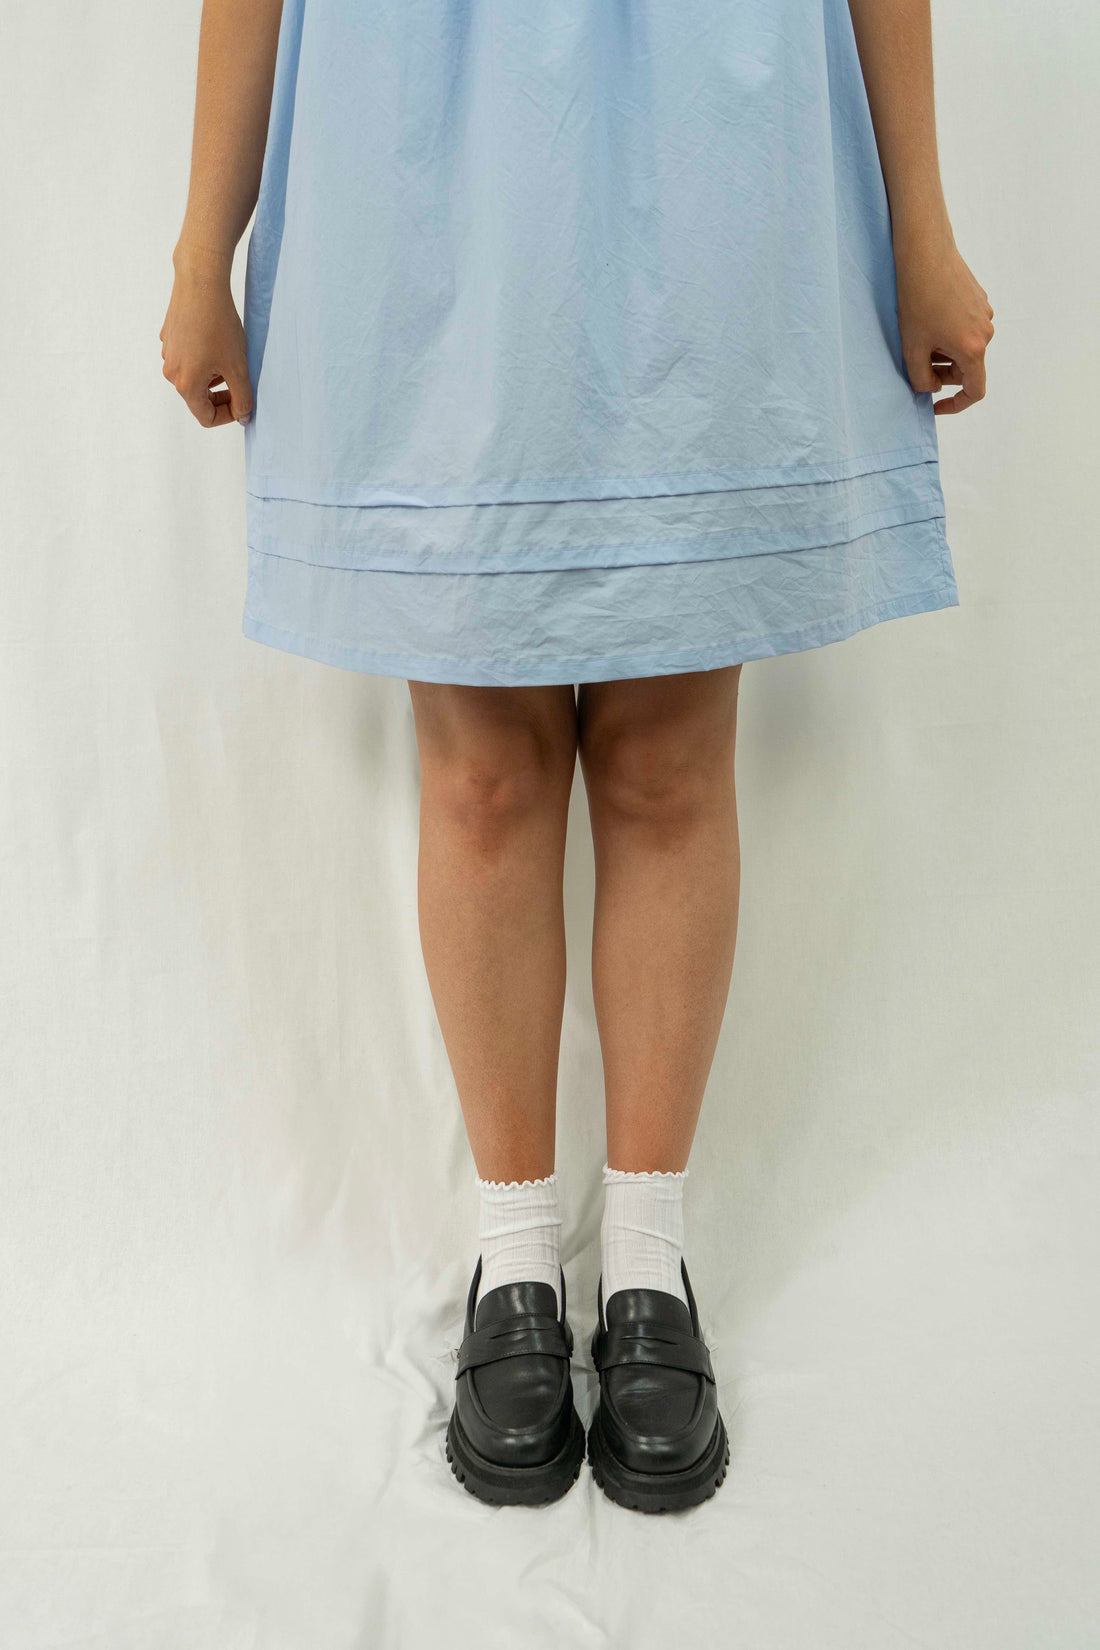 Danica frill dress - SHORT or LONG